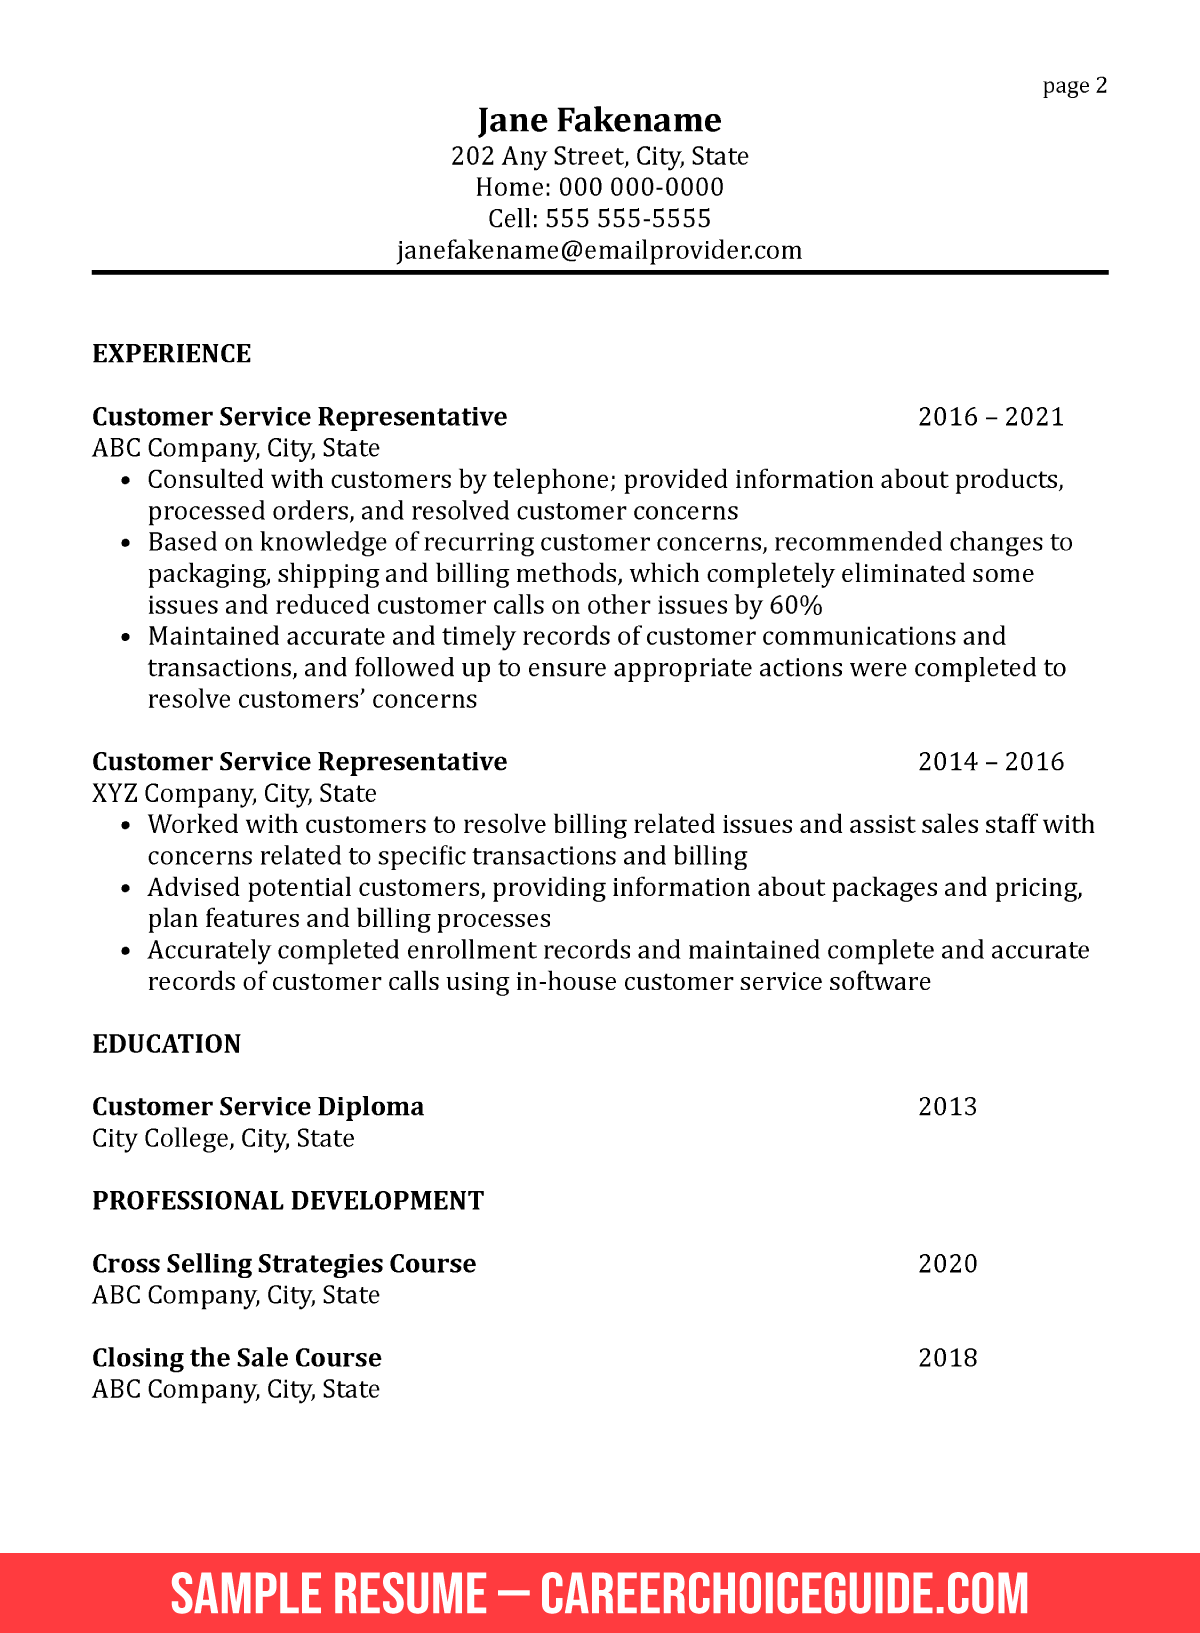 Sample Customer Service Resume